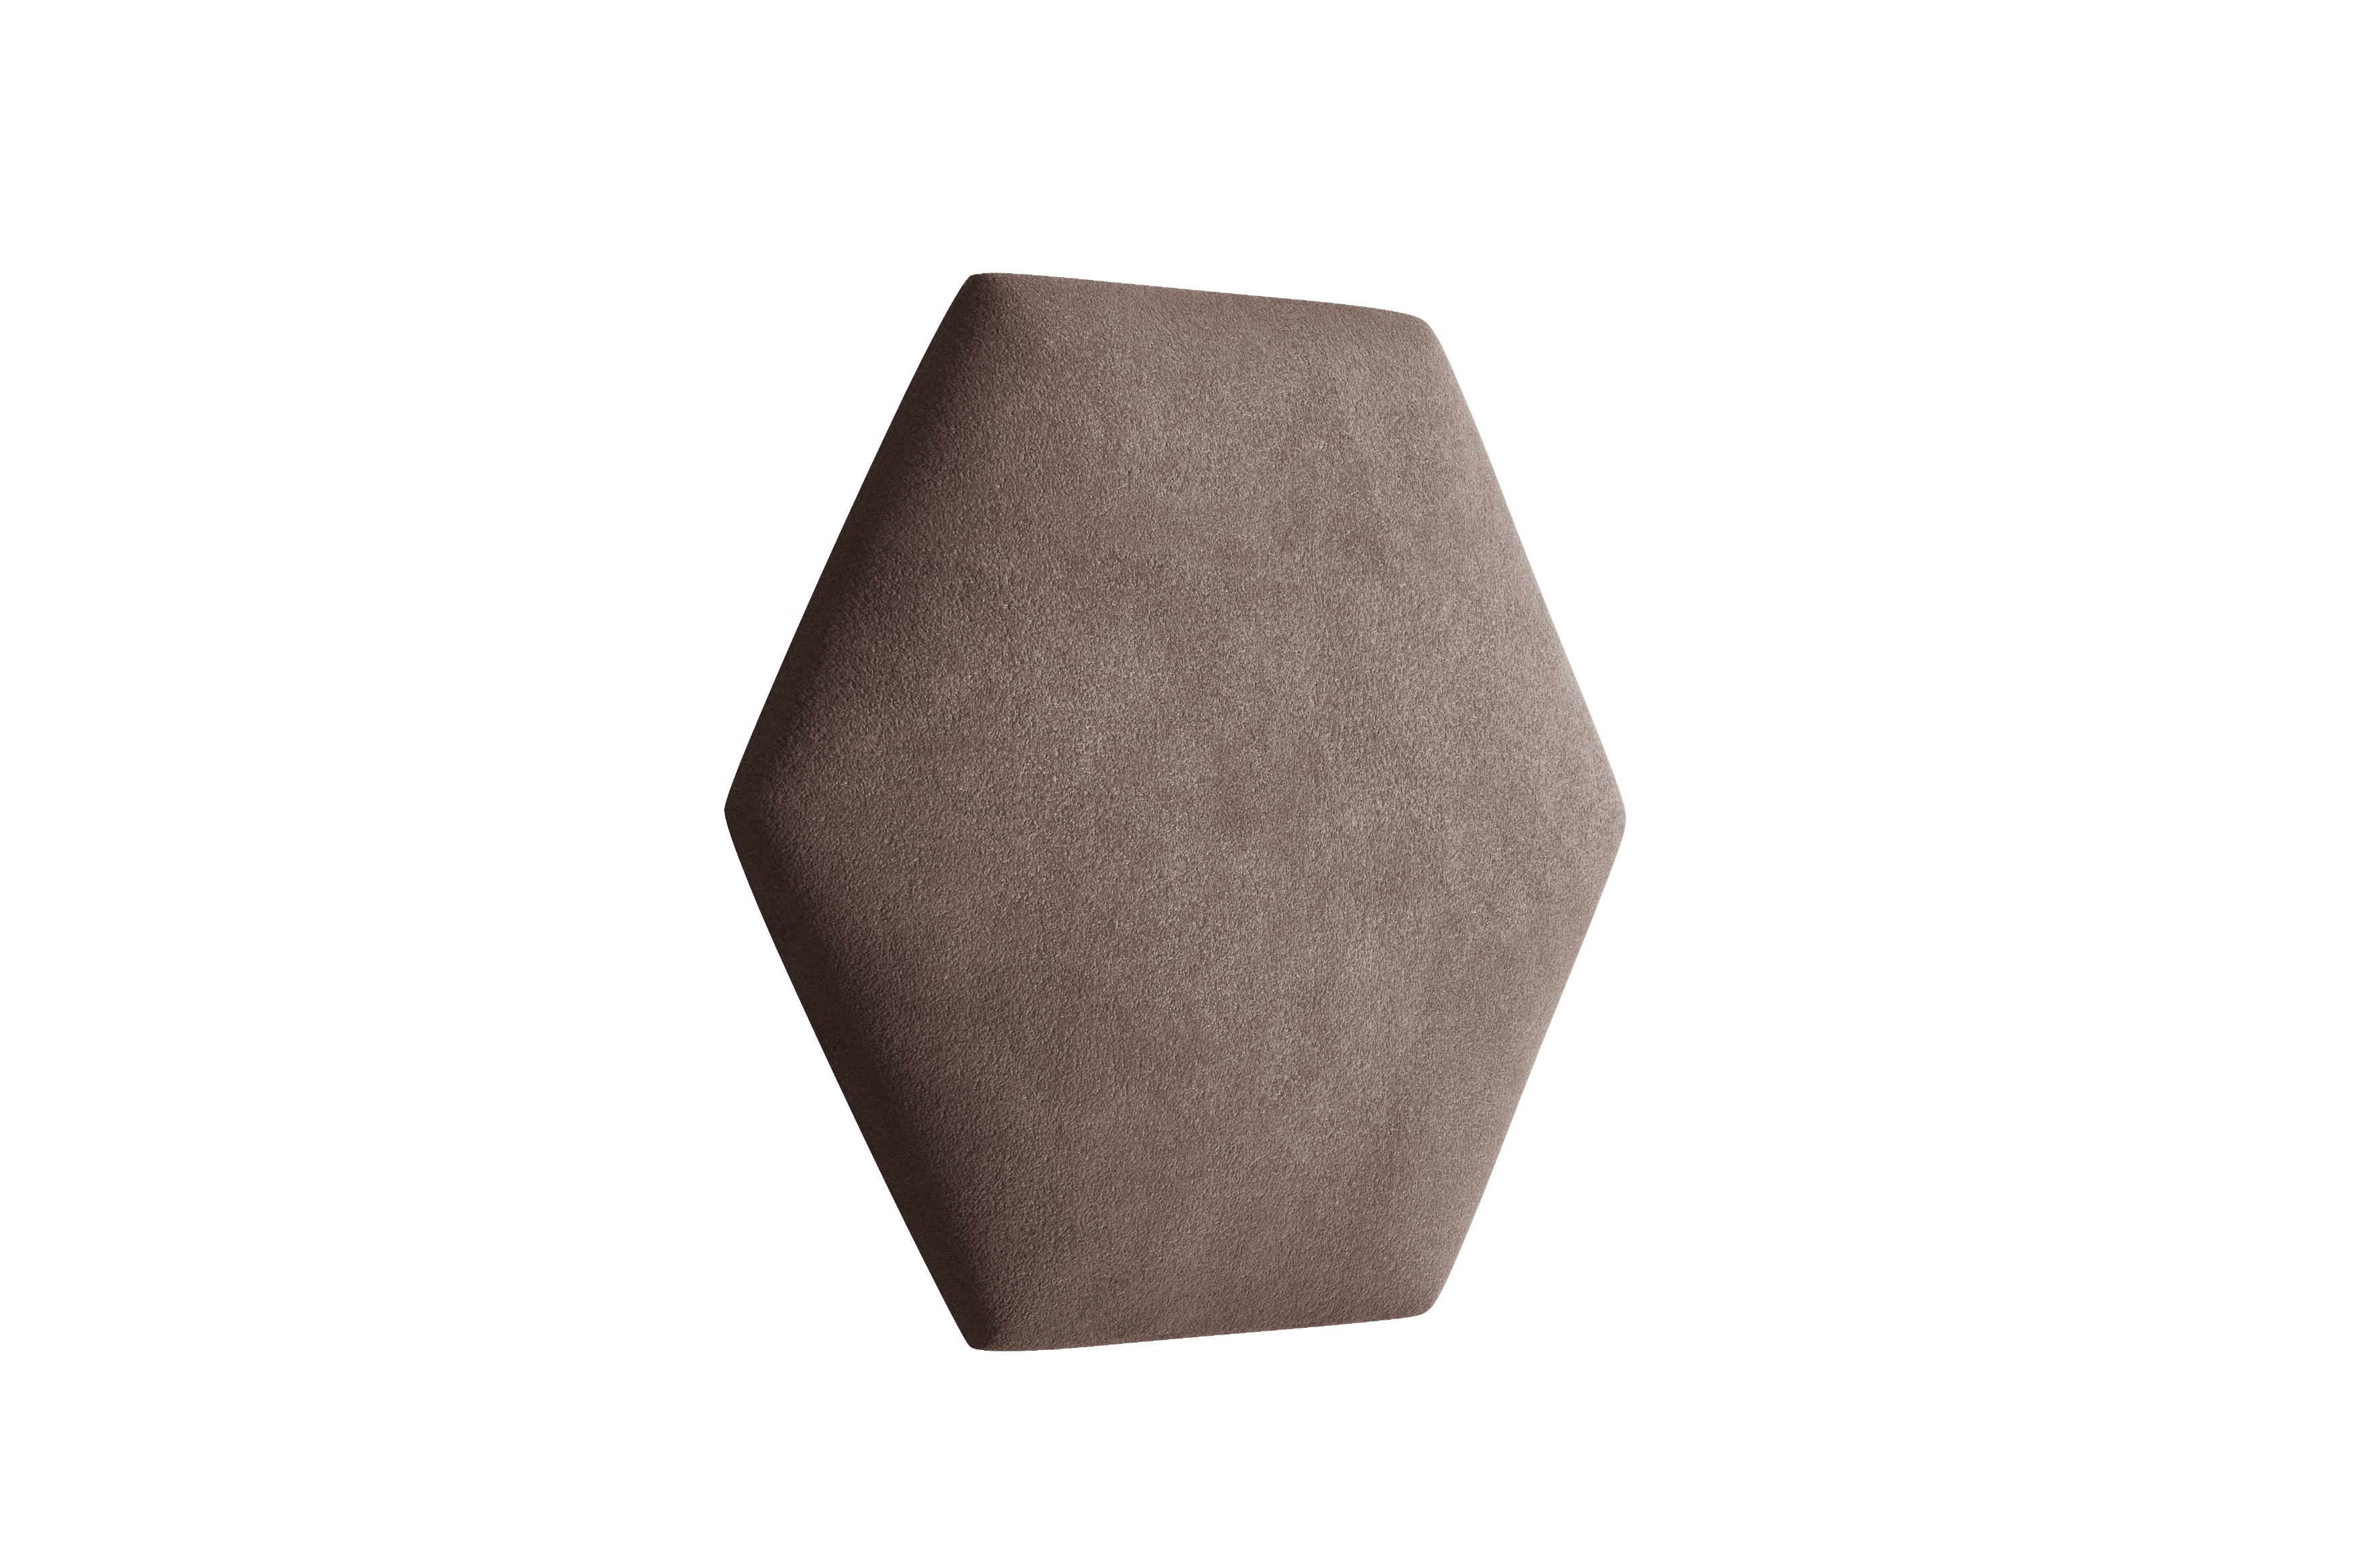 Eka Čalouněný panel Hexagon Trinity 40,5 cm x 35,3 cm - Tmavá béžová 2305